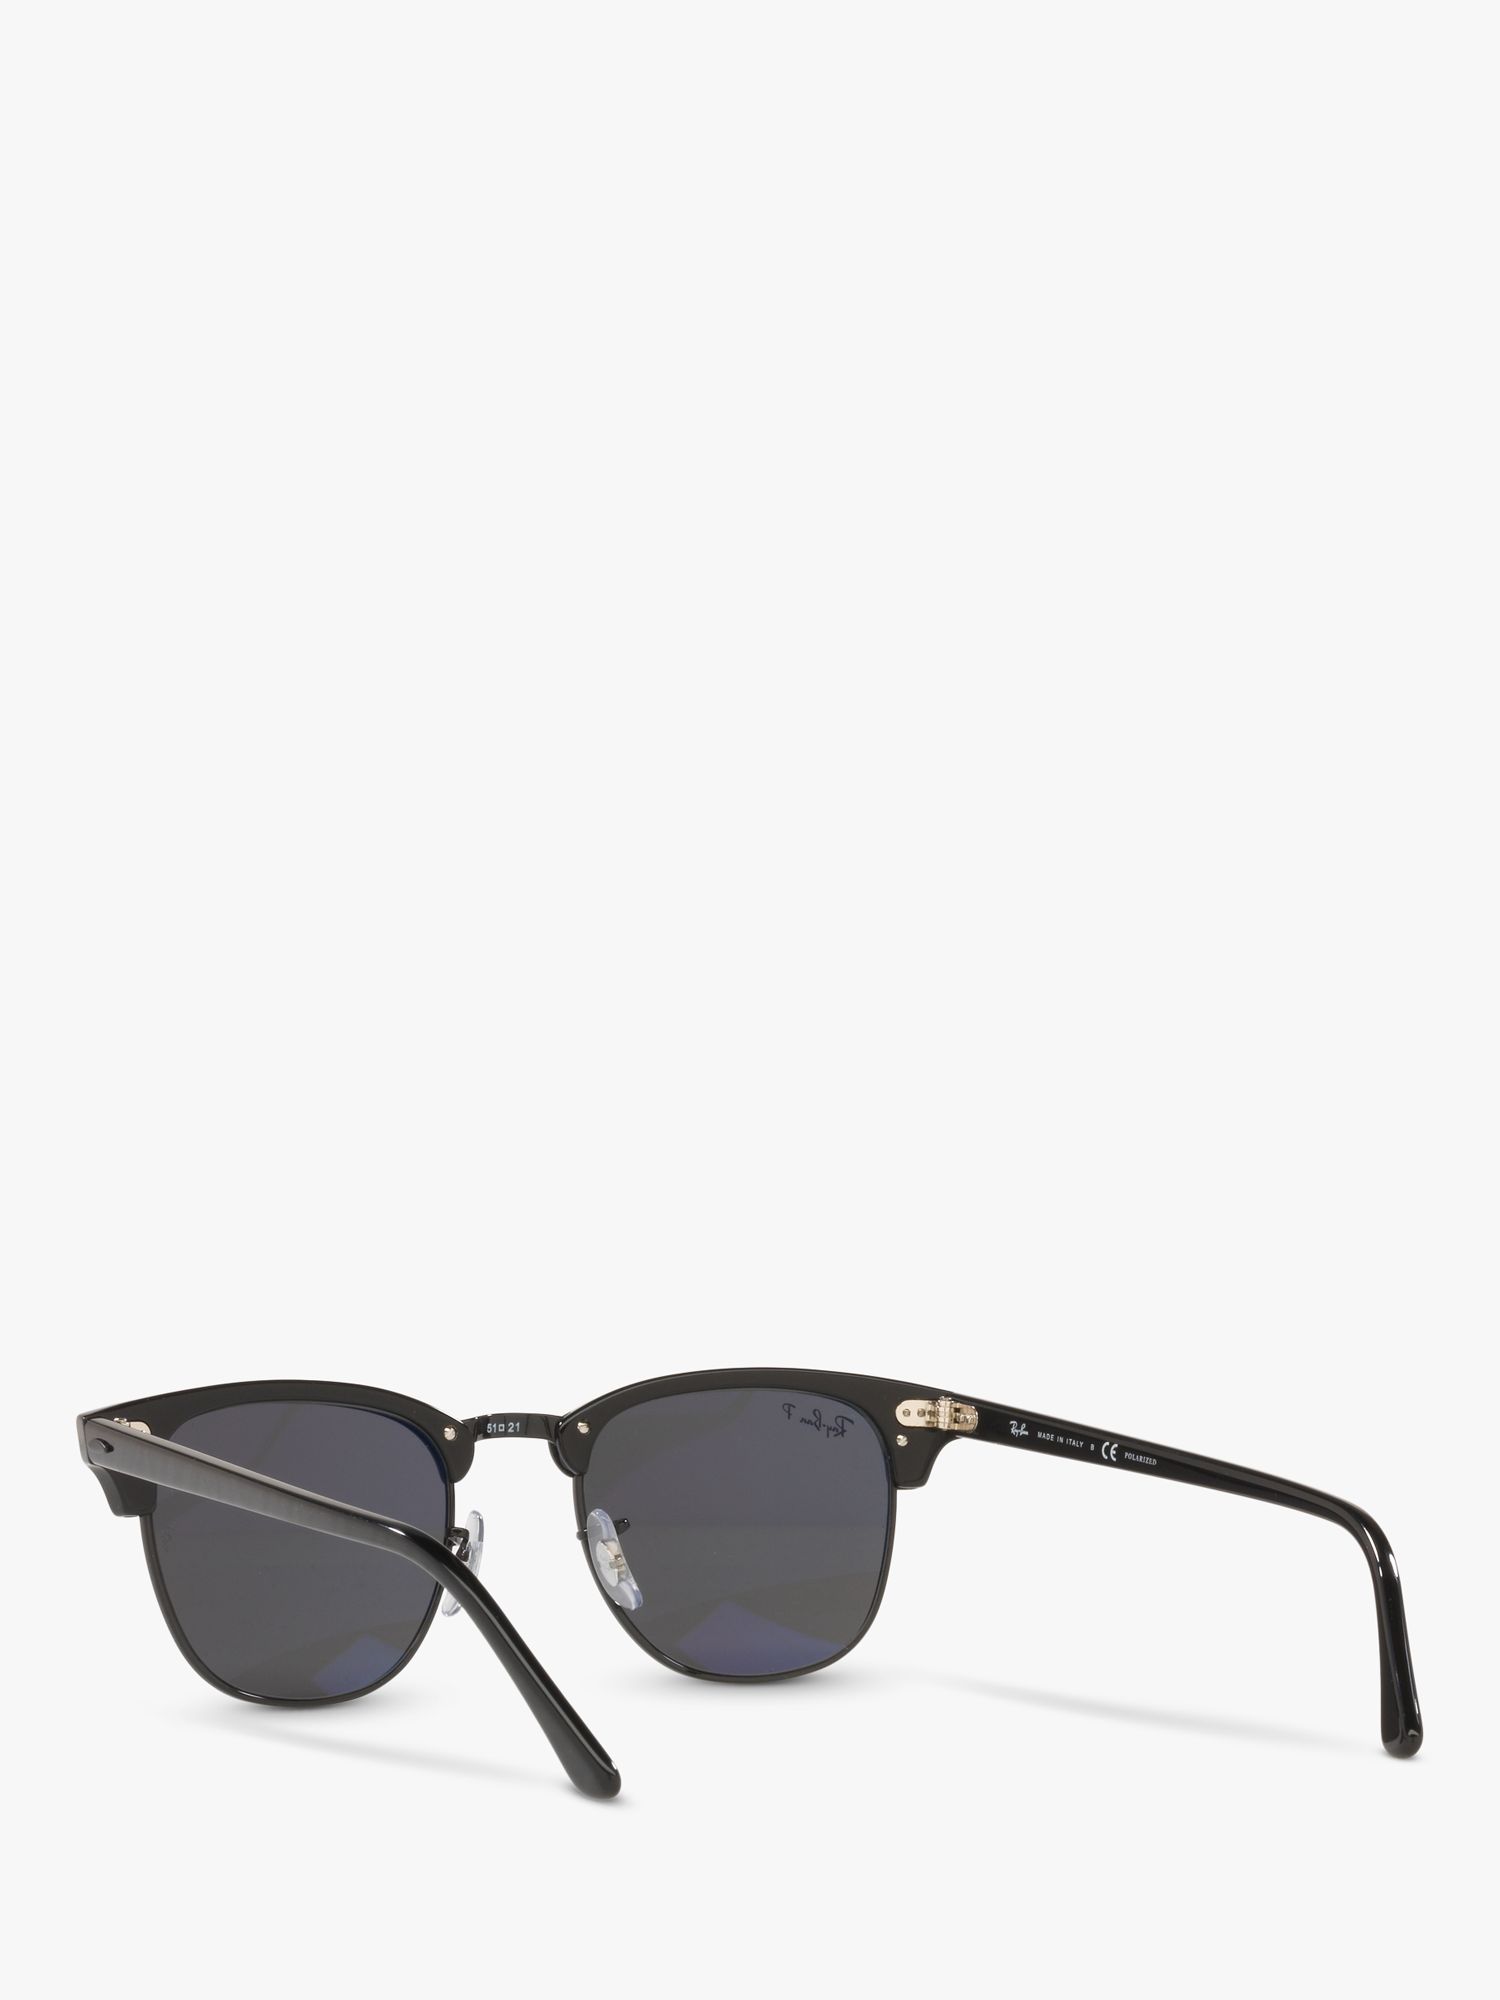 Ray-Ban RB3016 Unisex Polarised Clubmaster Sunglasses, Black/Grey at John  Lewis u0026 Partners